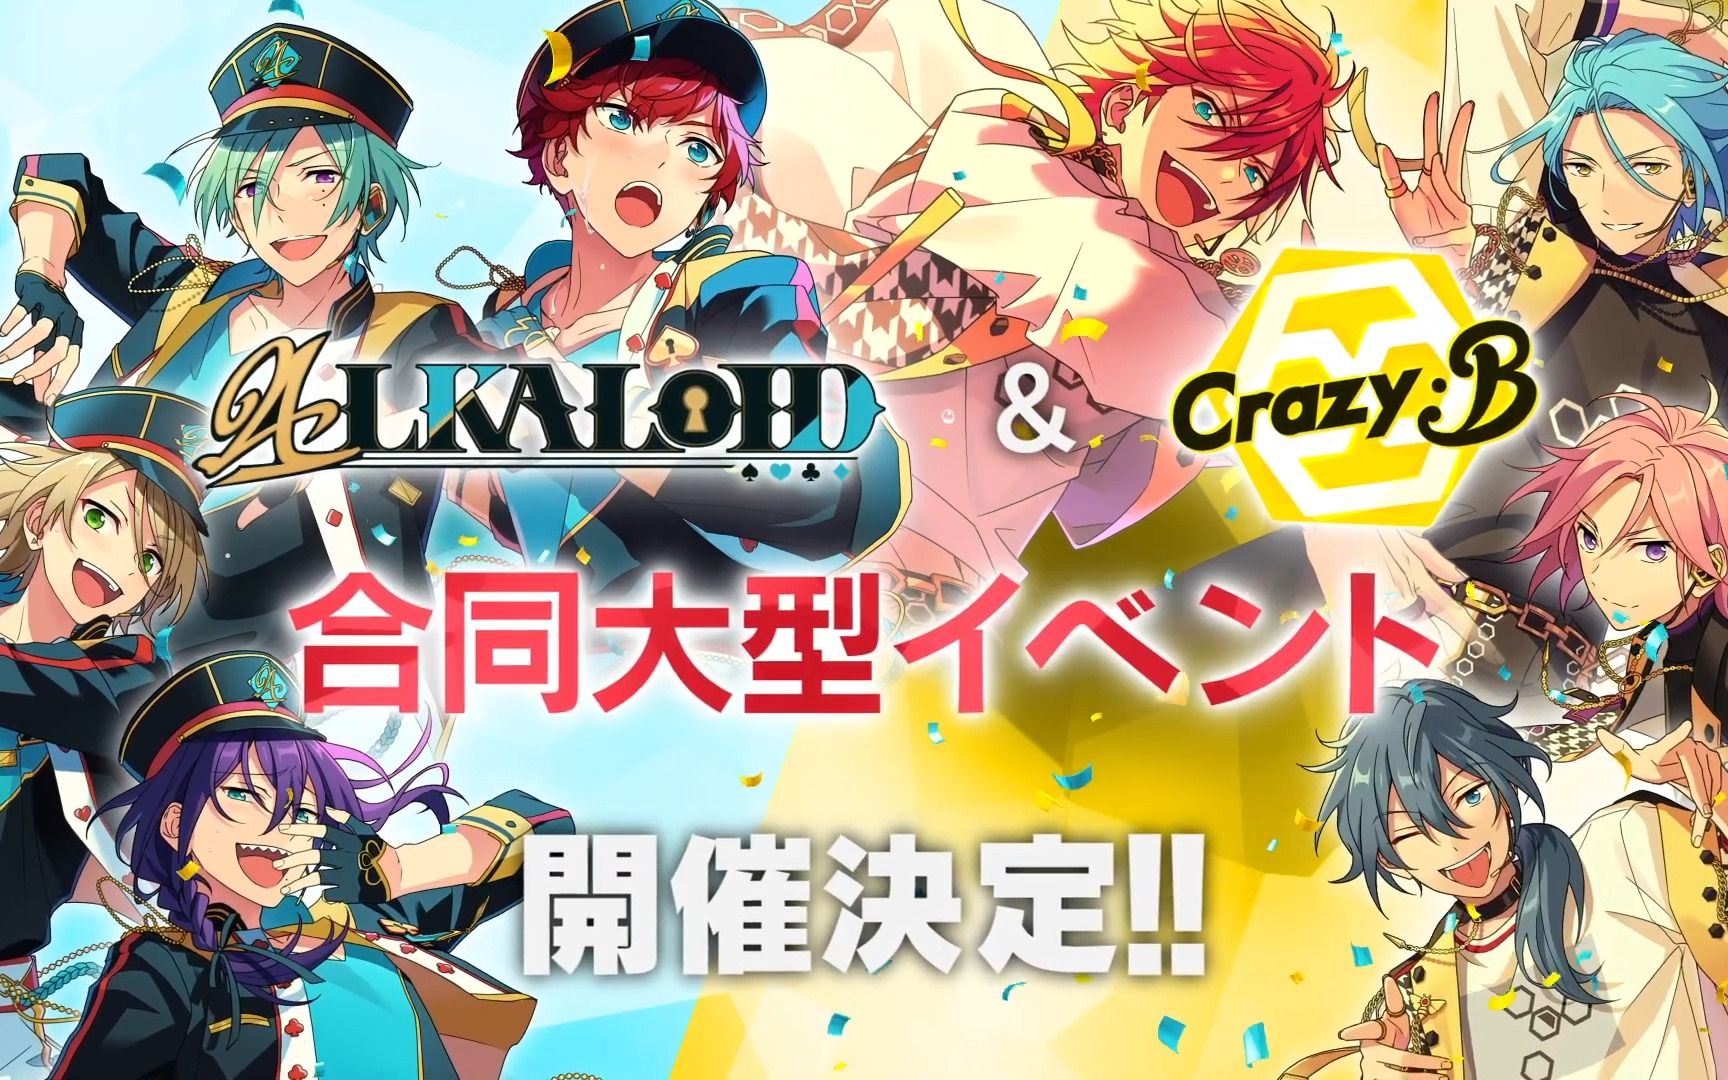 【ES!!】『ALKALOID』&『Crazy:B』 联合大型活动PV